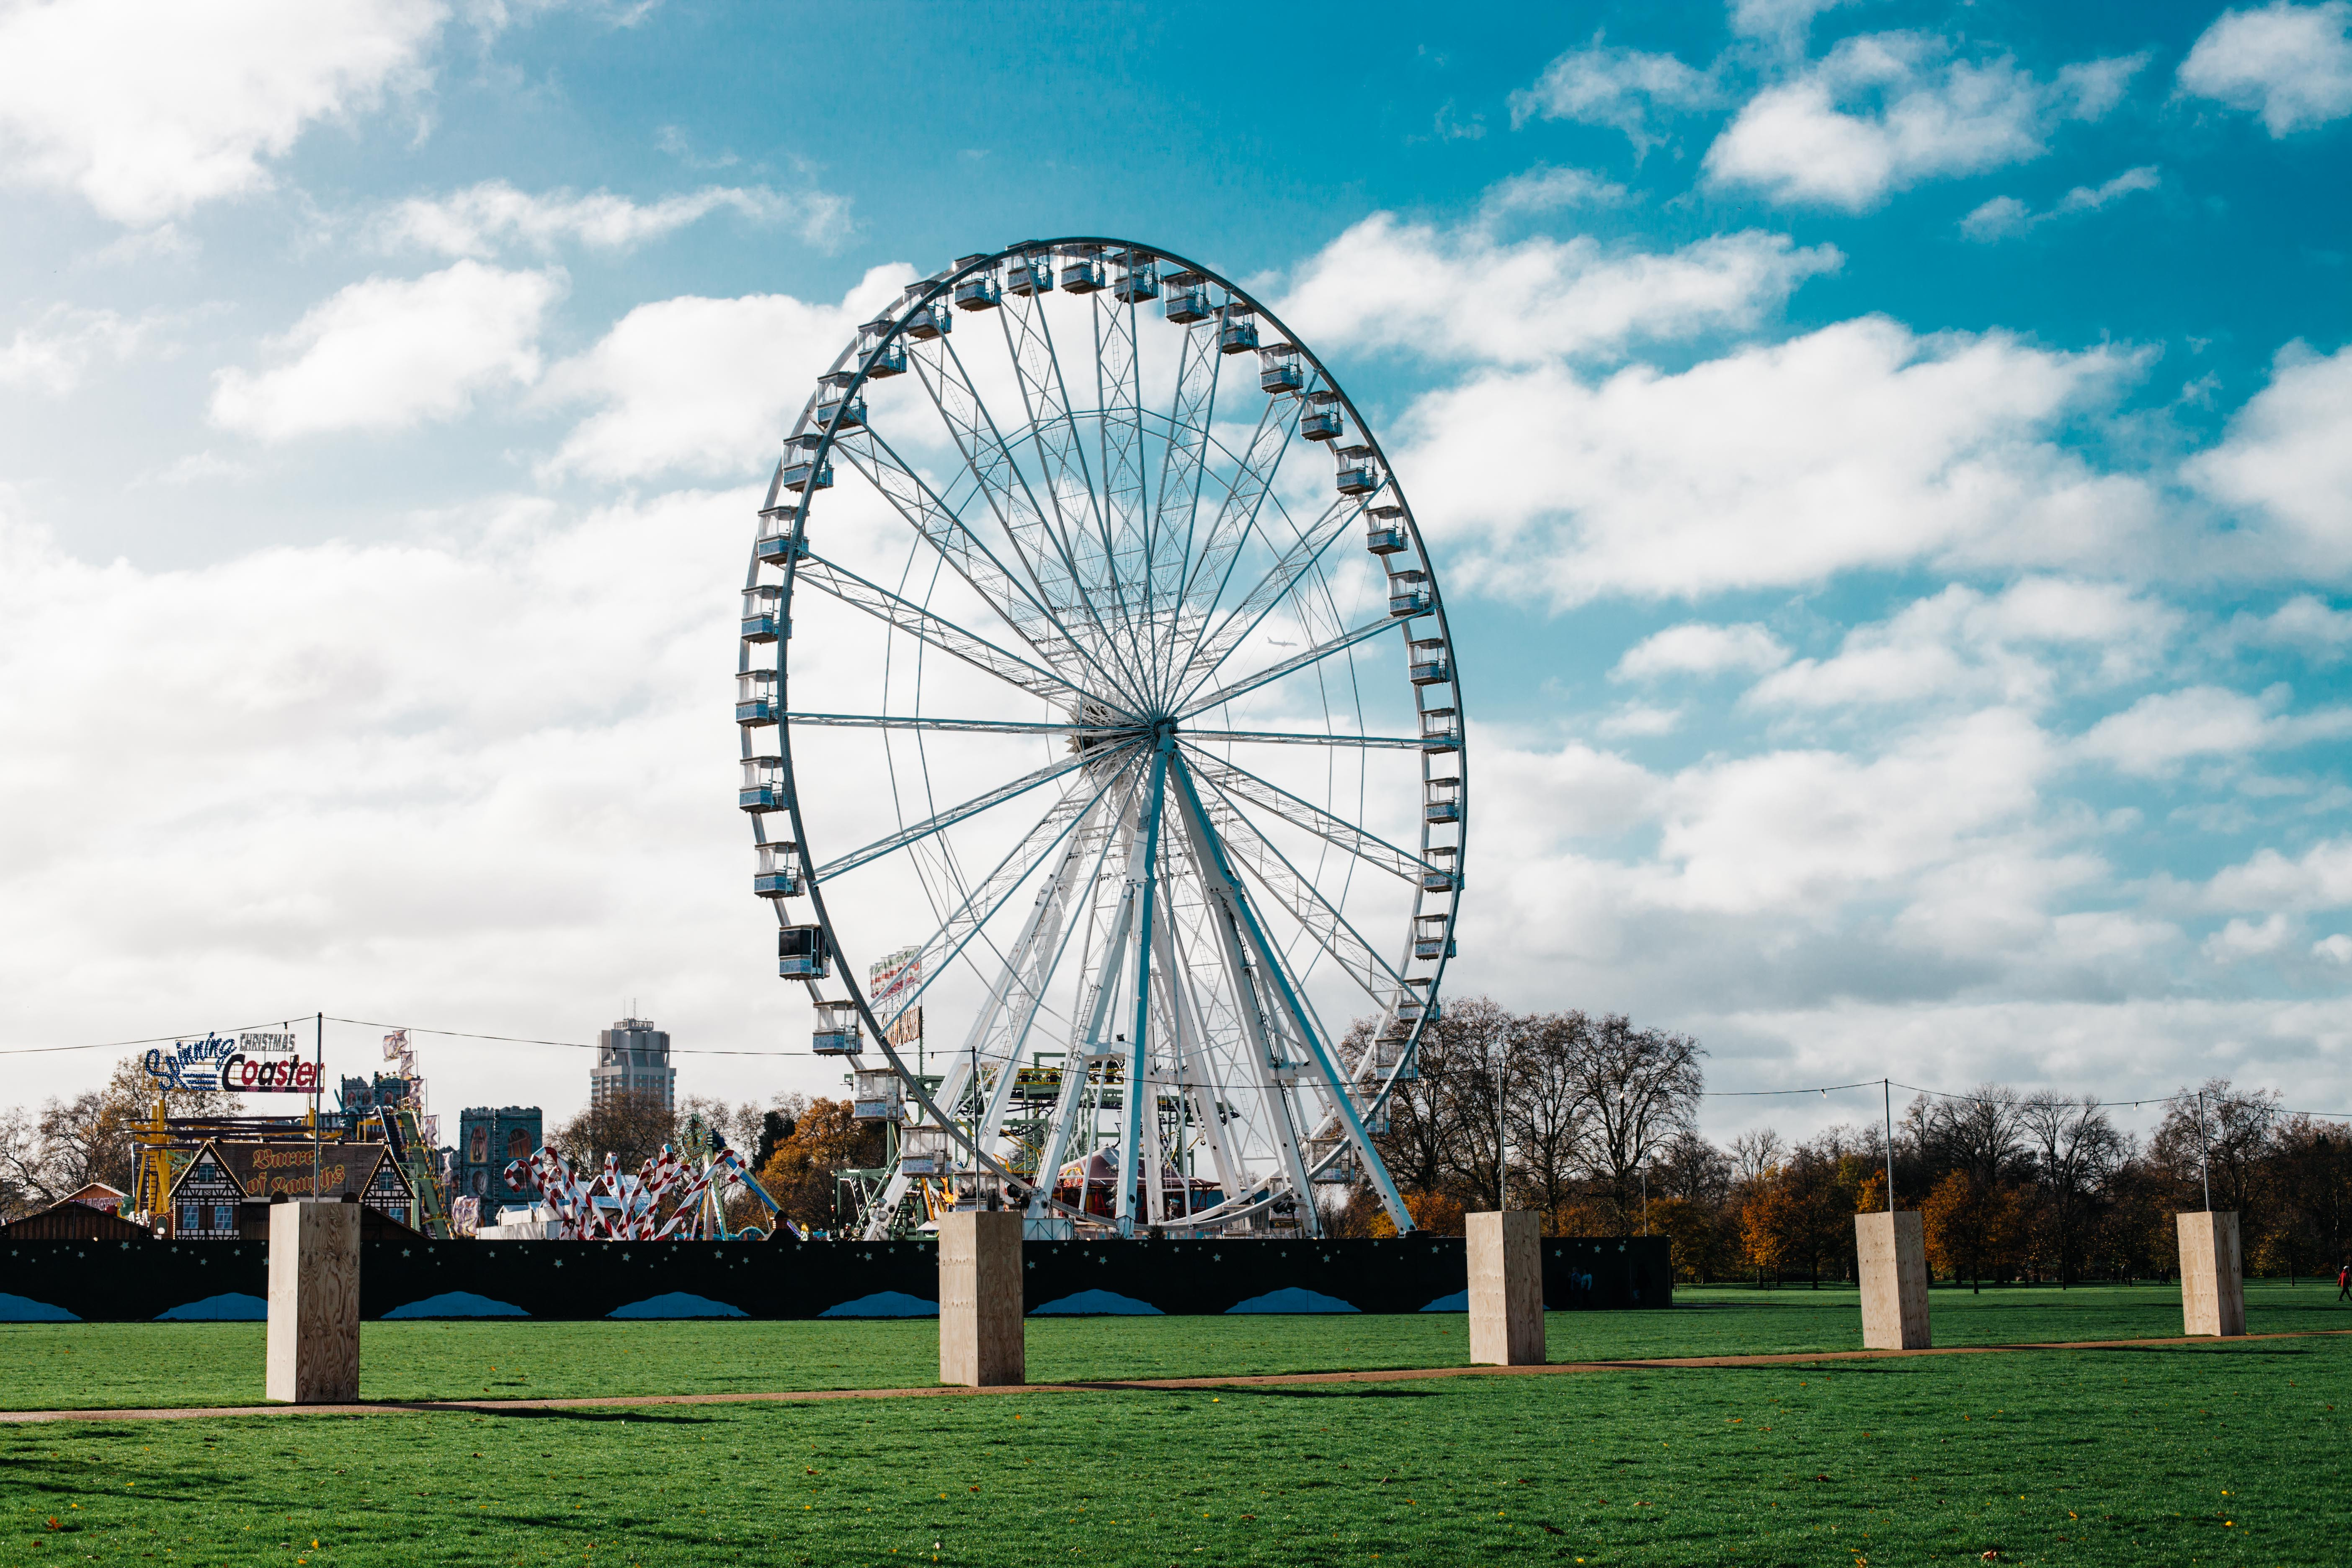 cities, park, ferris wheel, attraction